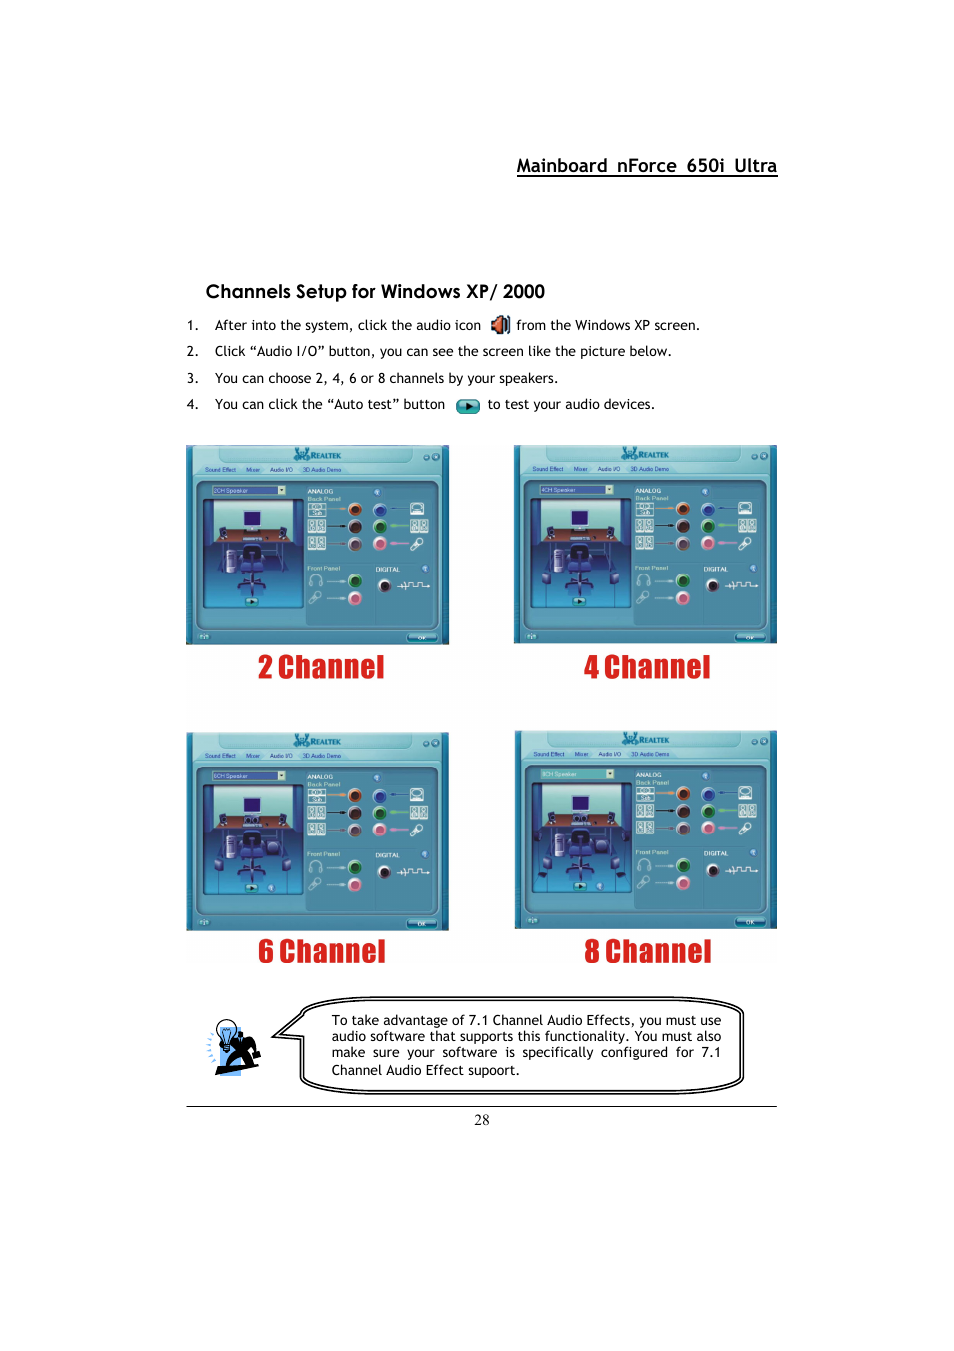 Mainboard nforce 650i ultra, Channels setup for windows xp/ 2000 | Nvidia NFORCE 650I User Manual | Page 32 / 70